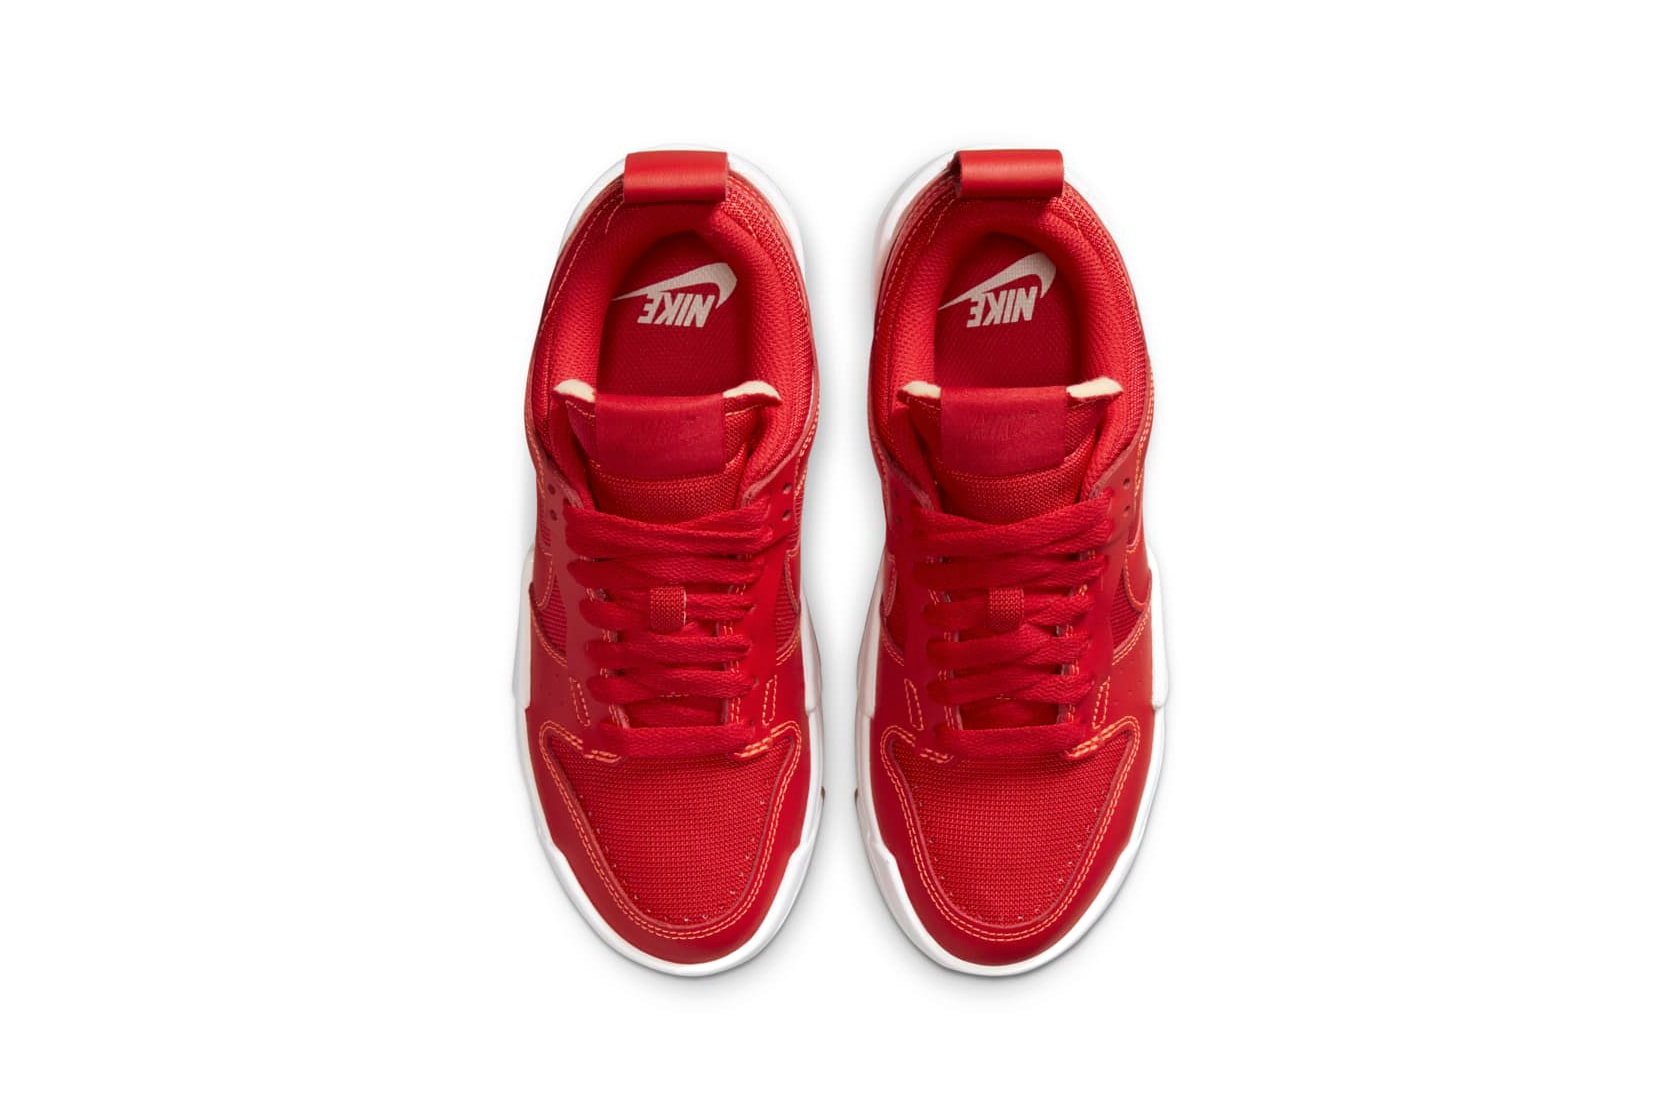 Nike Dunk Low Disrupt "University Red" Women's Exclusive Sneaker Swoosh 1980s Basketball Shoe Trainer Footwear Drop Date Release Information Closer Look 